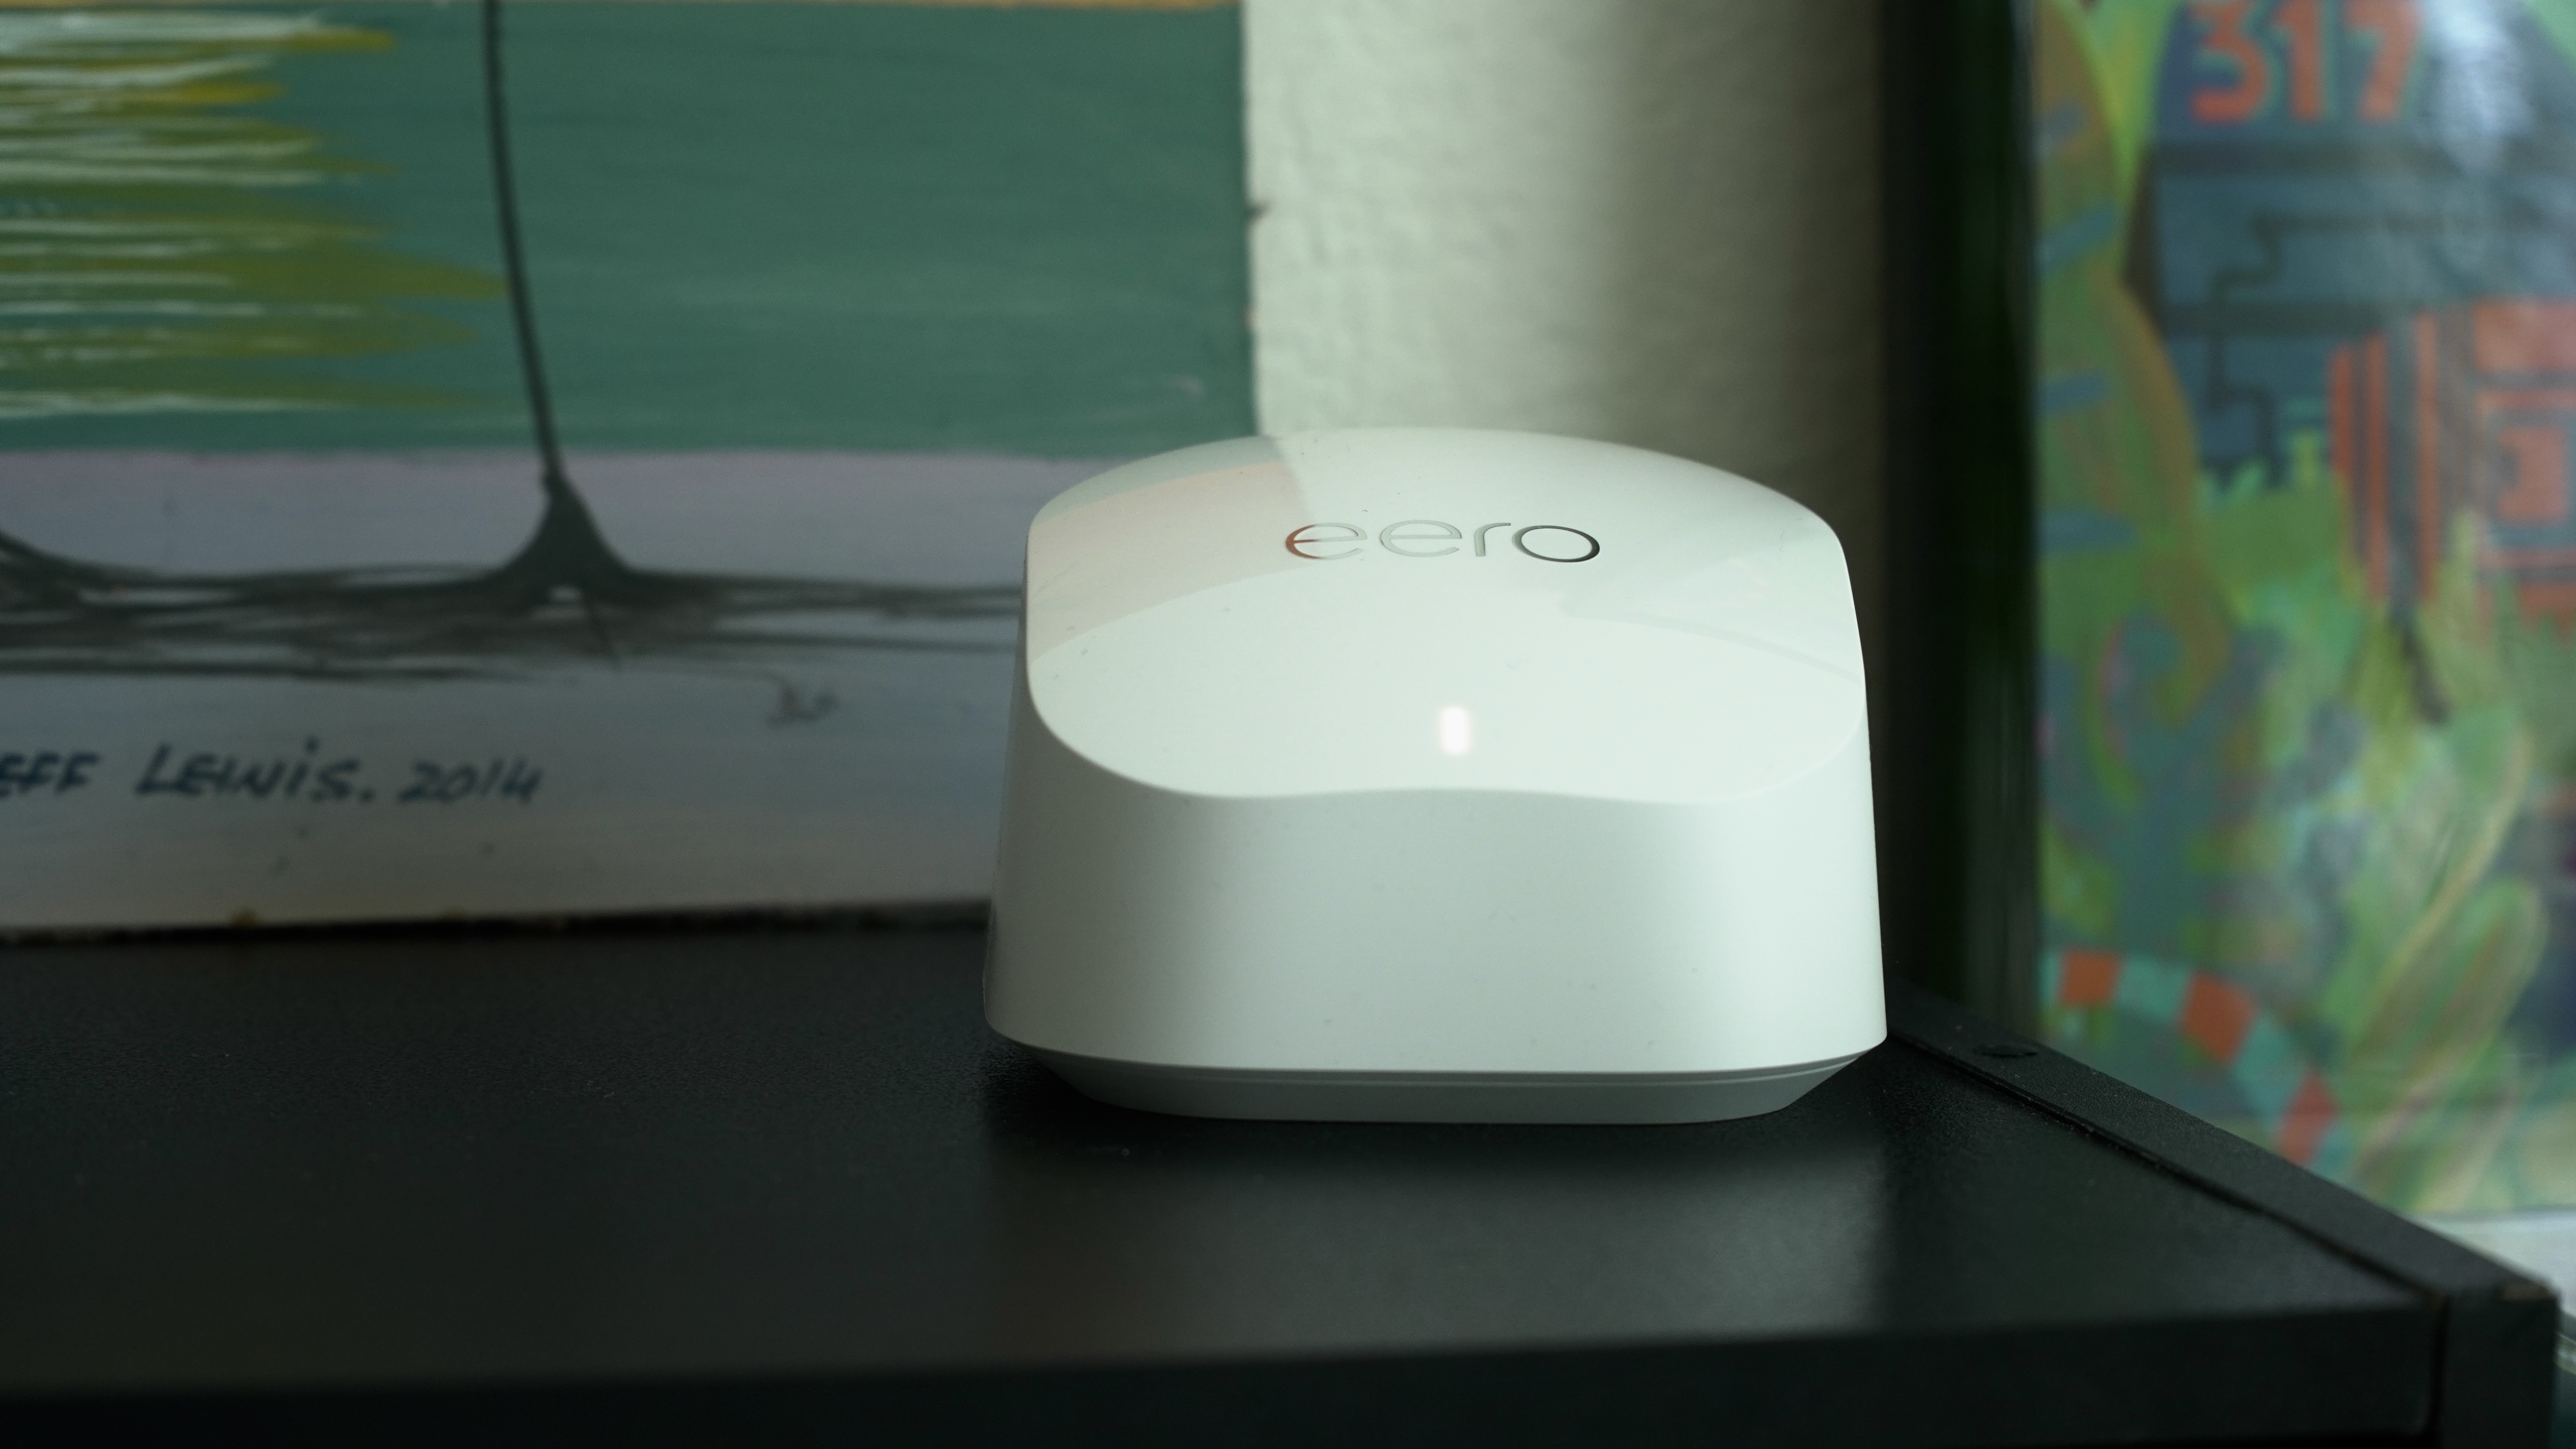 Eero launches Eero Pro 6E and Eero 6+ Wi-Fi systems